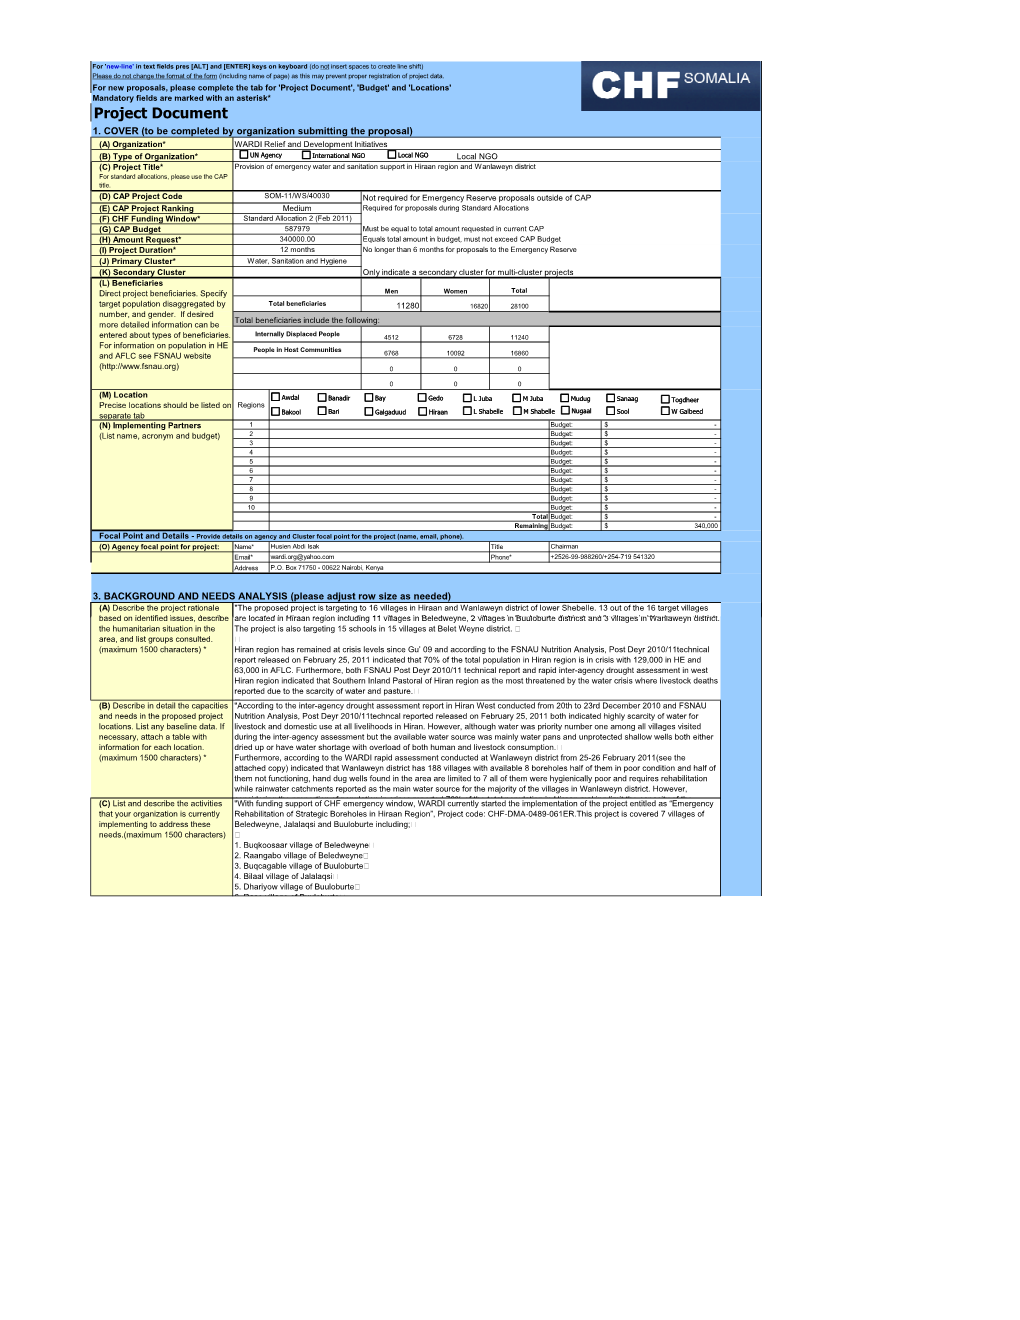 CHF-DMA-0489-099 Project Document.Xlsx